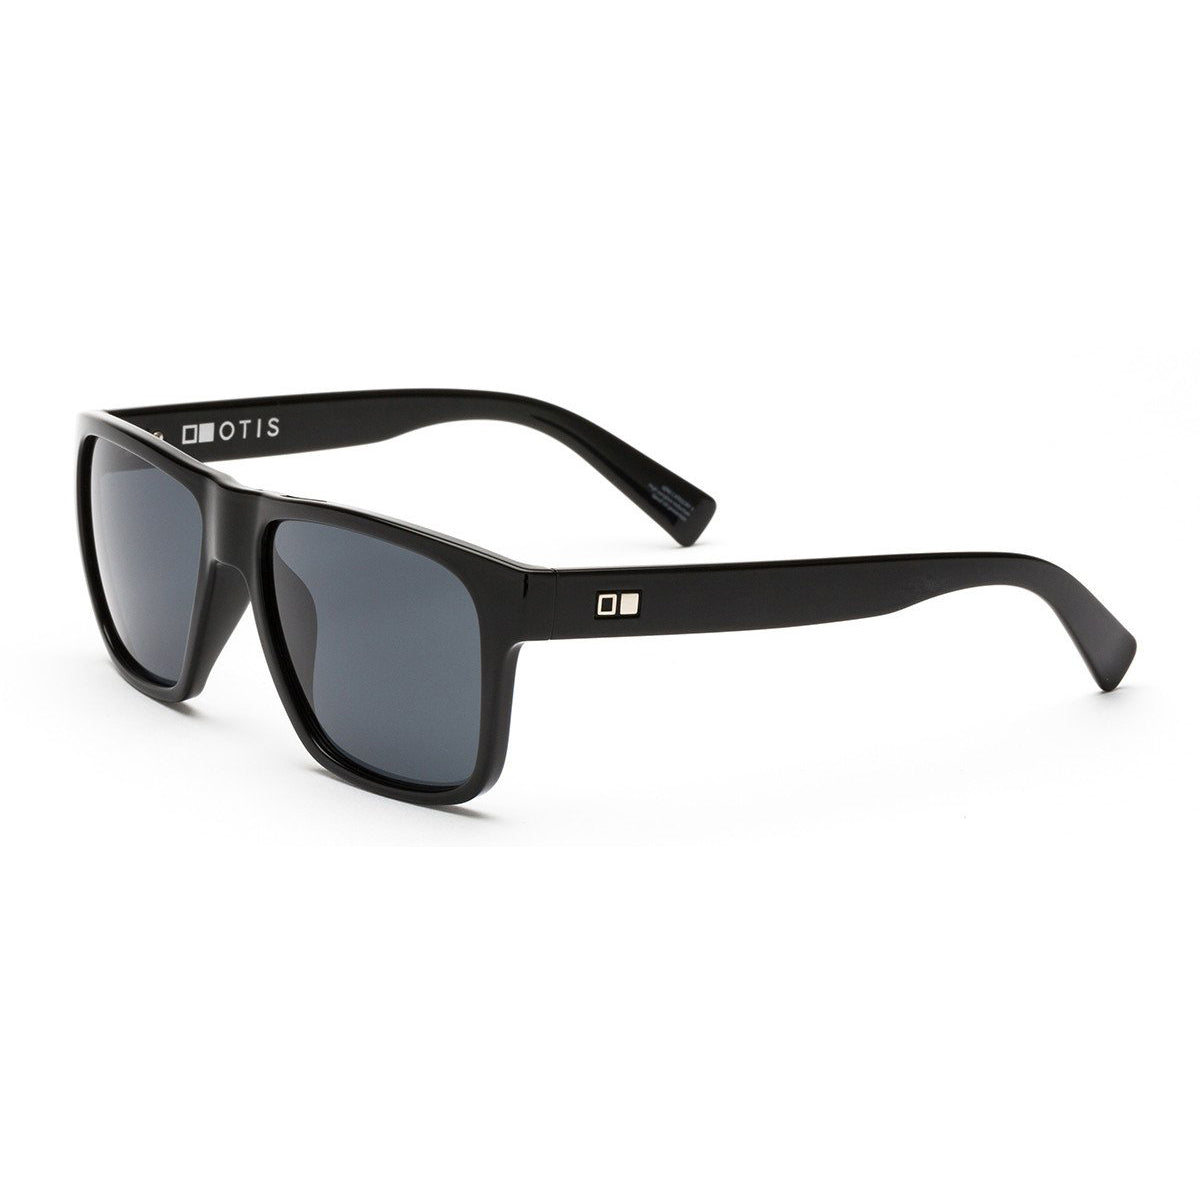 Otis Life On Mars Mineral Glass Sunglasses -Matte Black L.I.T Grey Polarized Sunglasses